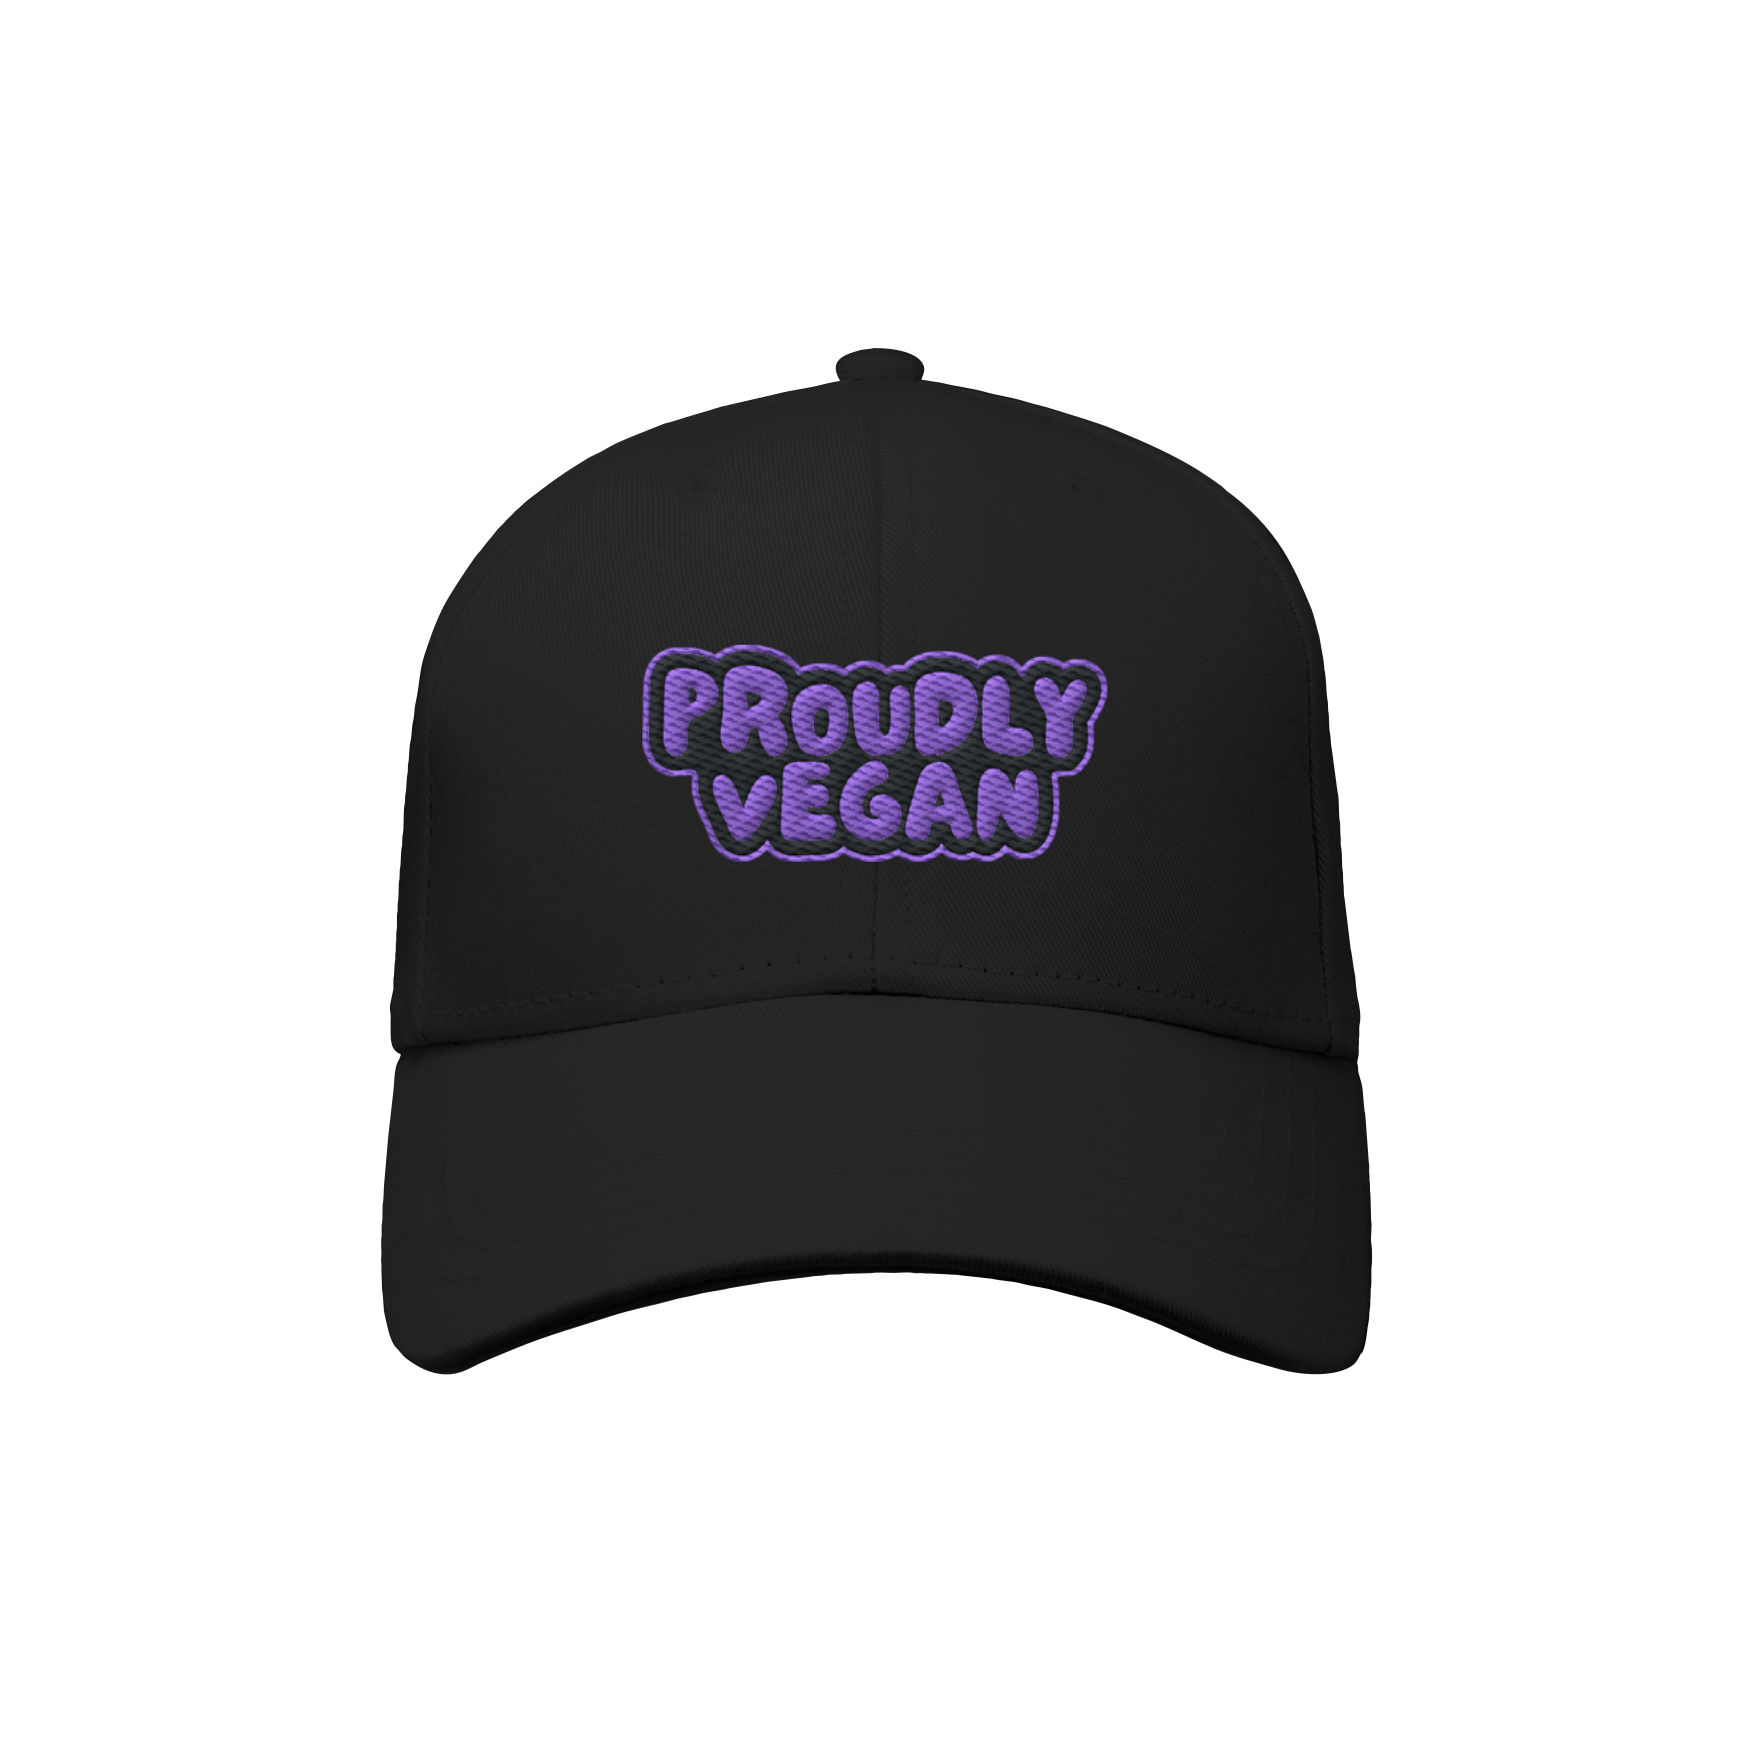 Porudly Vegan -  Baseball Cap